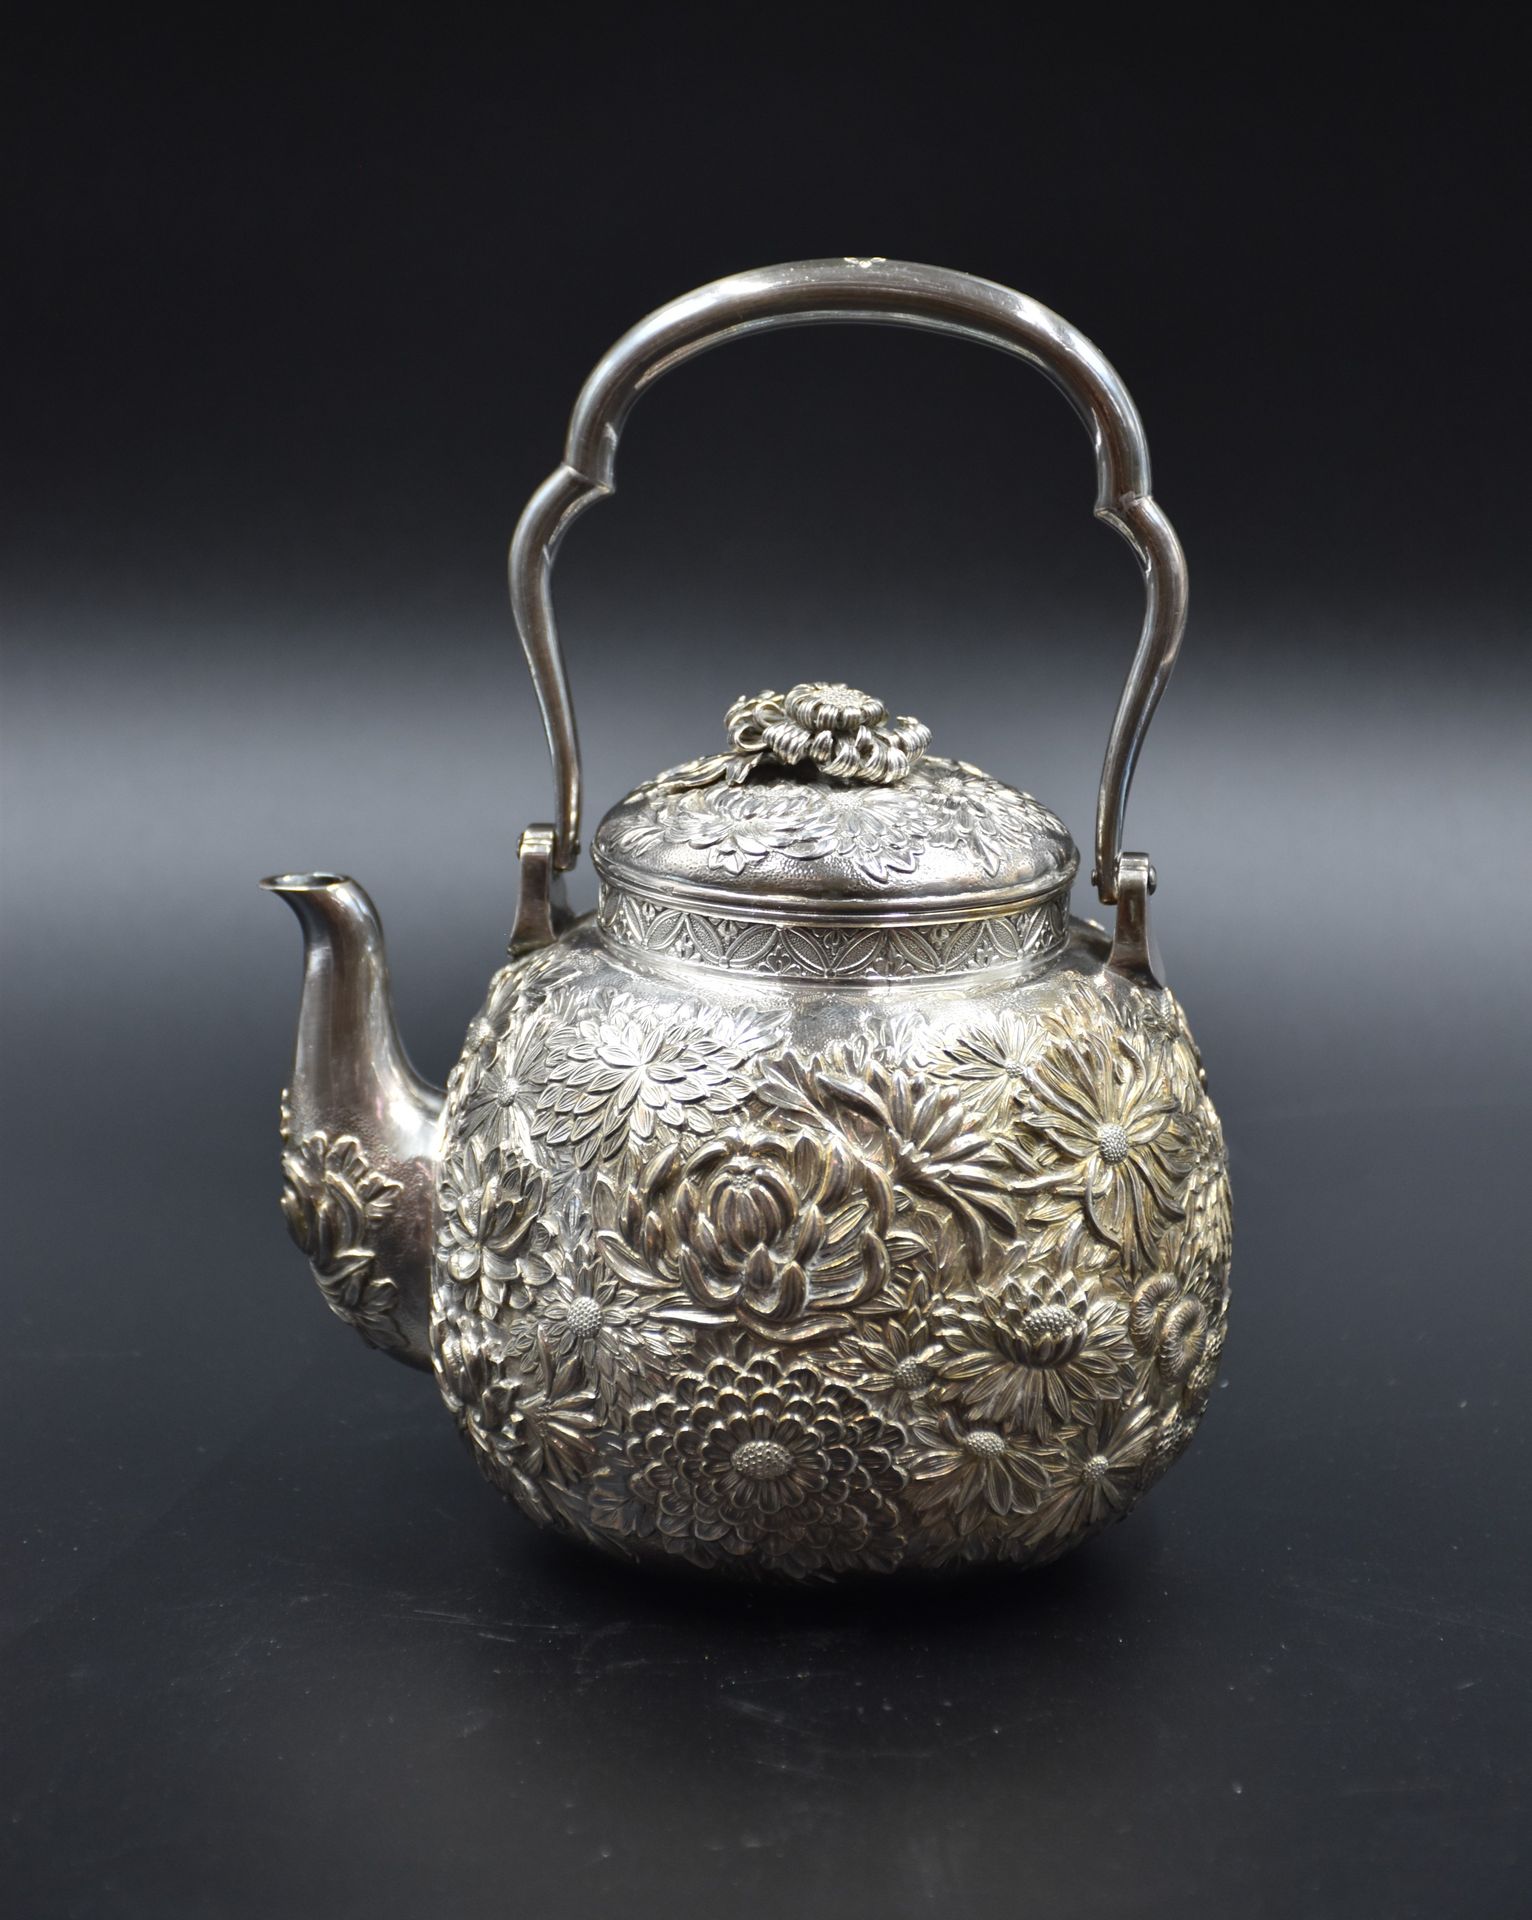 Null 中国银制千花图案茶壶。底座下有中文签名 "刘益"。指甲处的高度：13厘米。重量：440克。